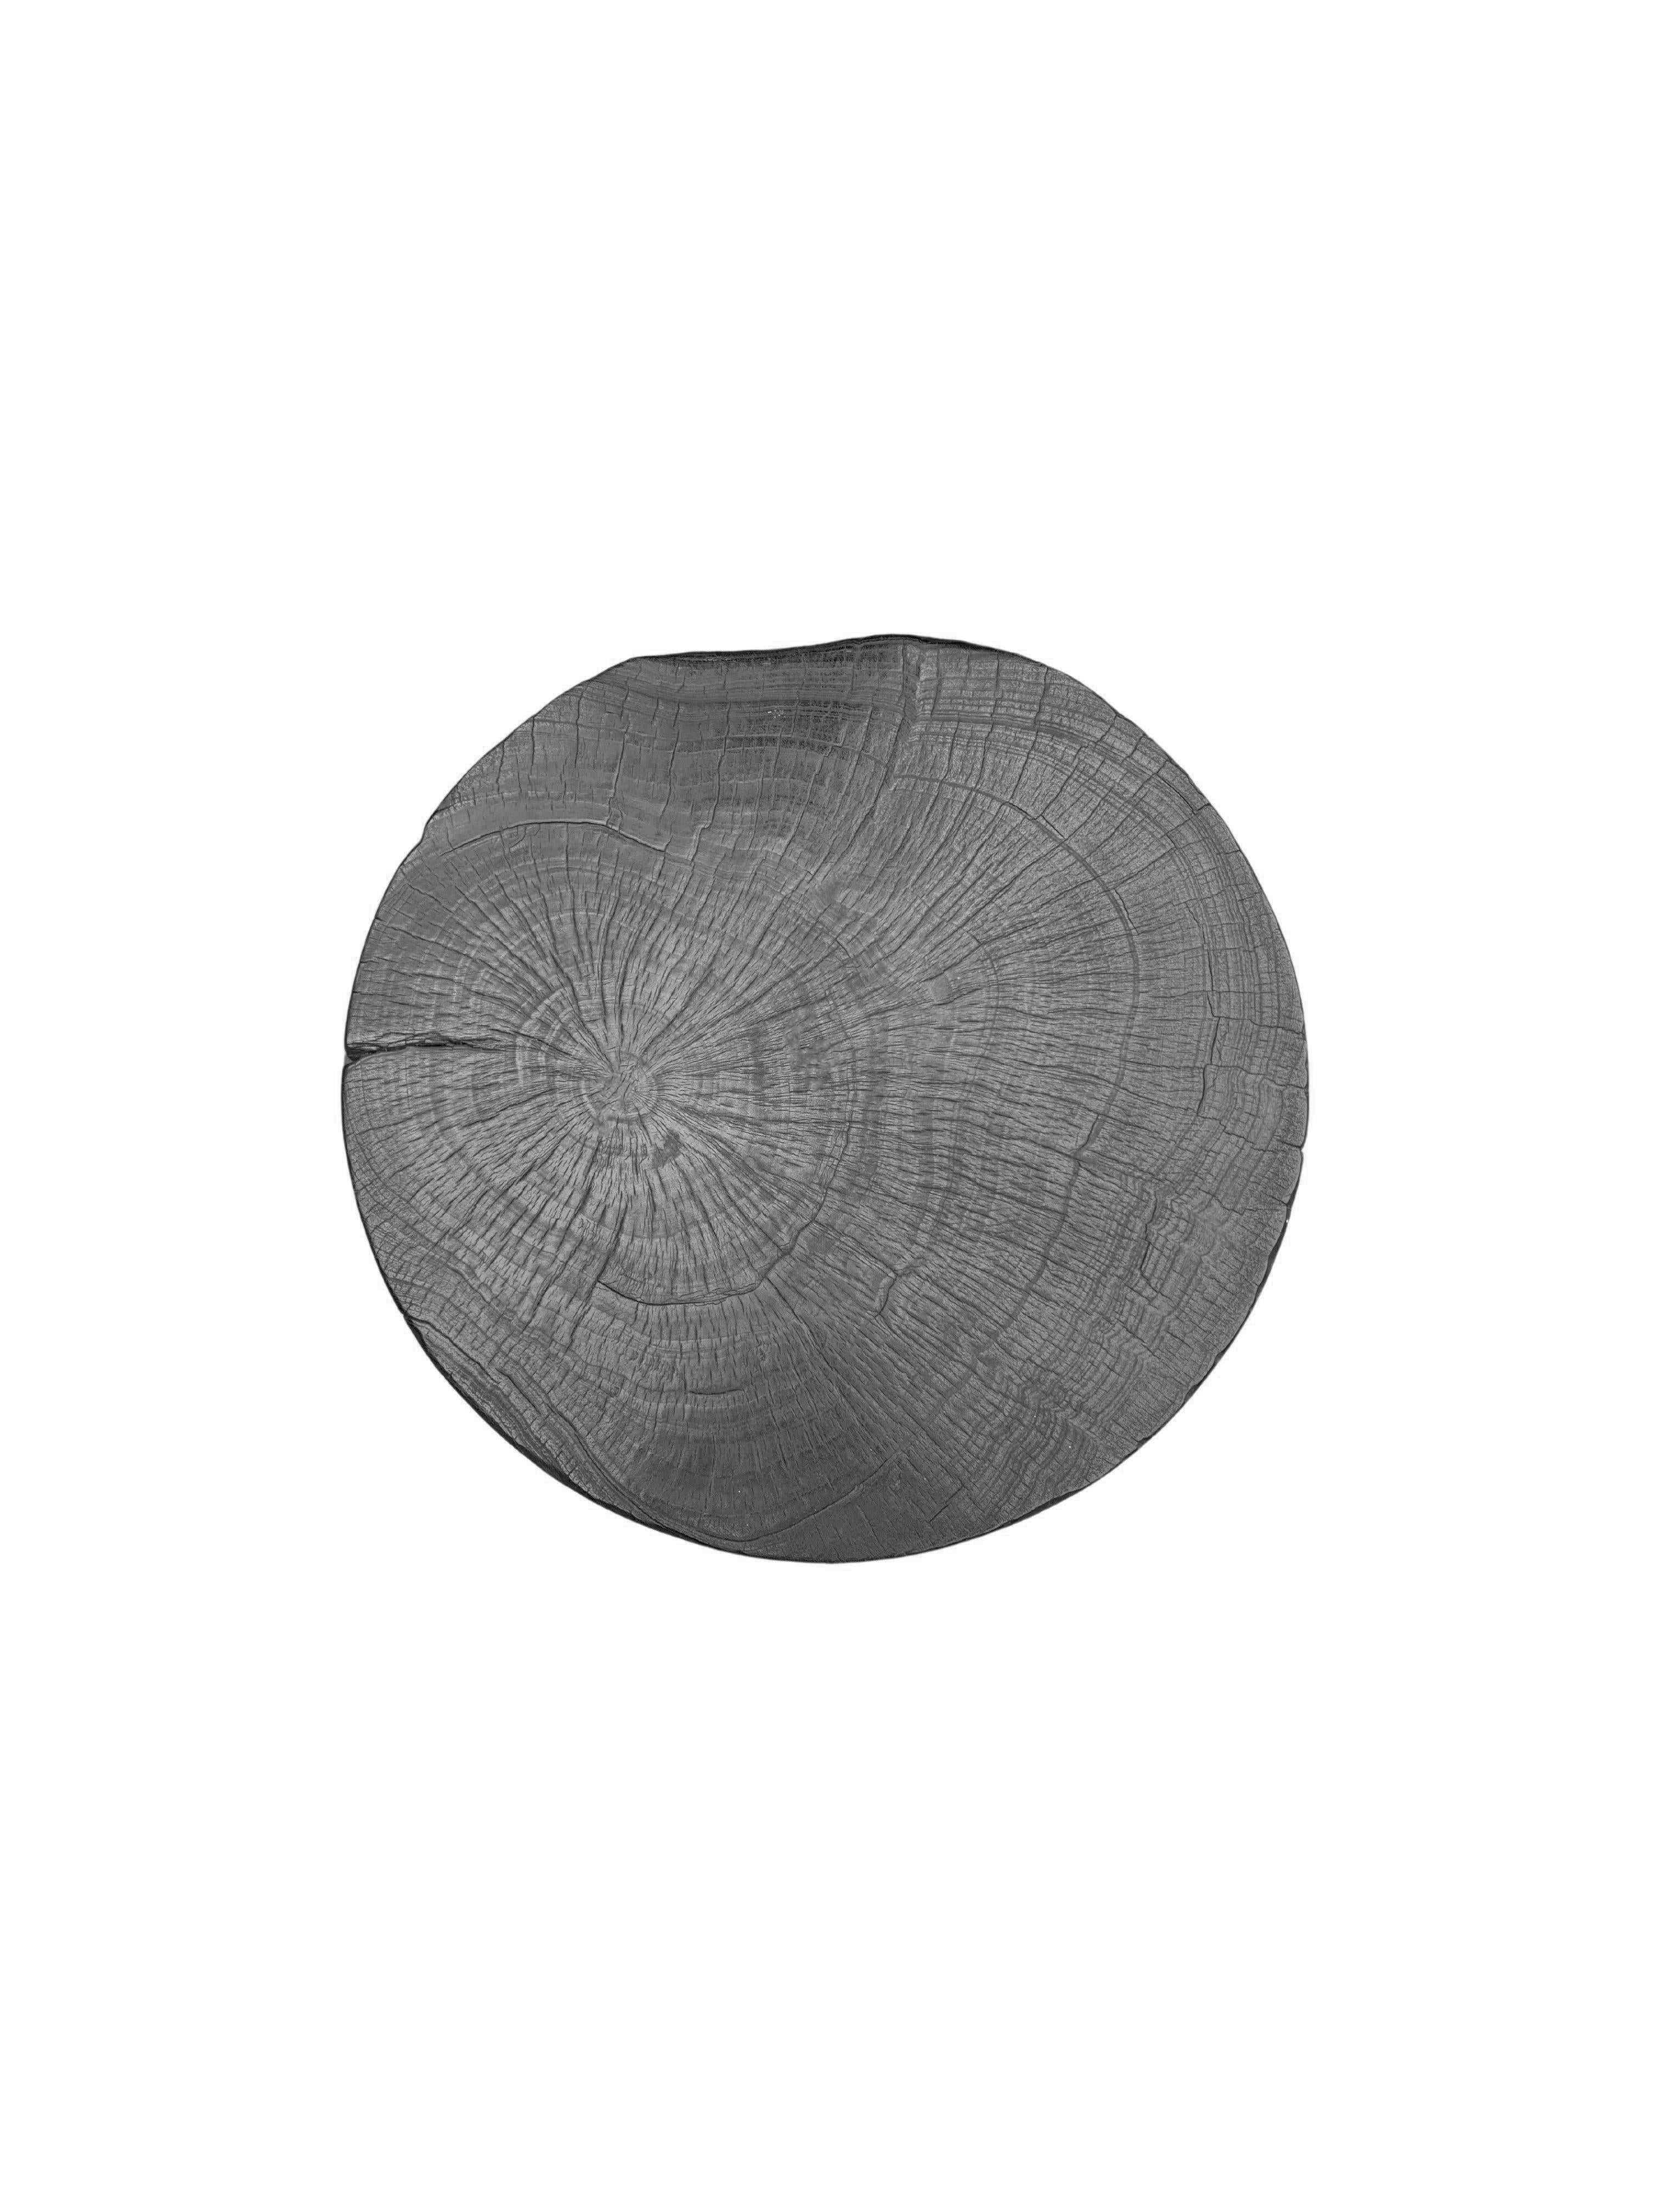 Hand-Crafted Geometric Mango Wood Side Table Burnt Finish Modern Organic For Sale